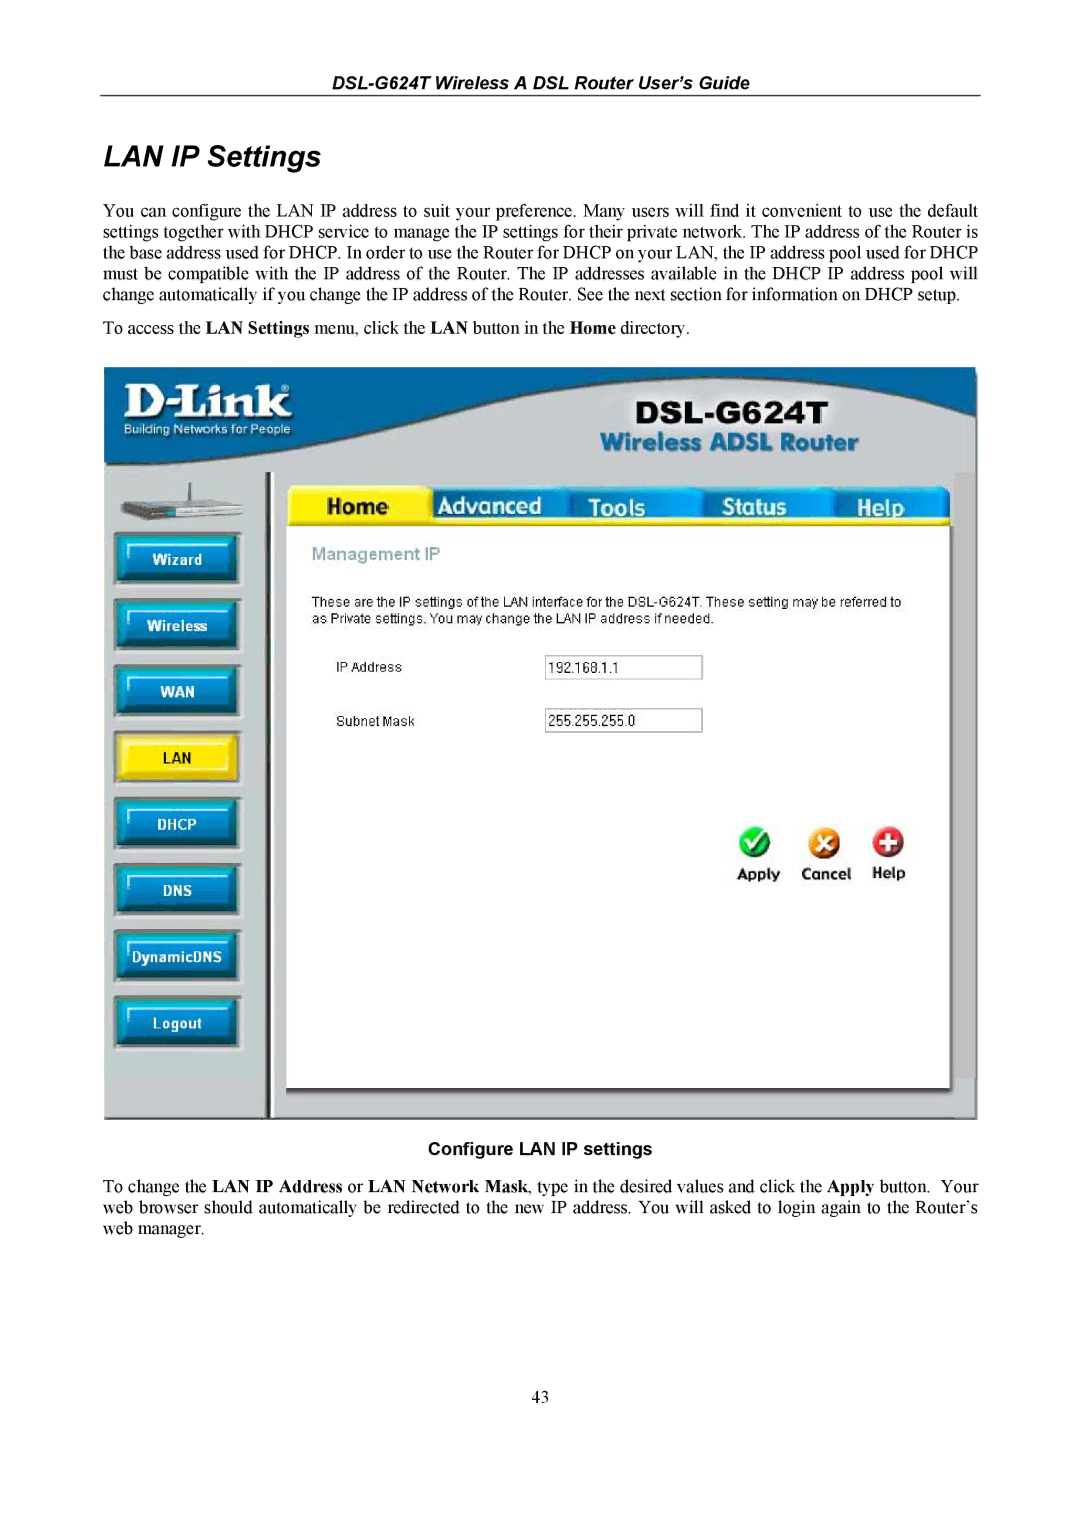 D-Link D-Link Wireless ADSL Router, DSL-G624T manual LAN IP Settings, Configure LAN IP settings 